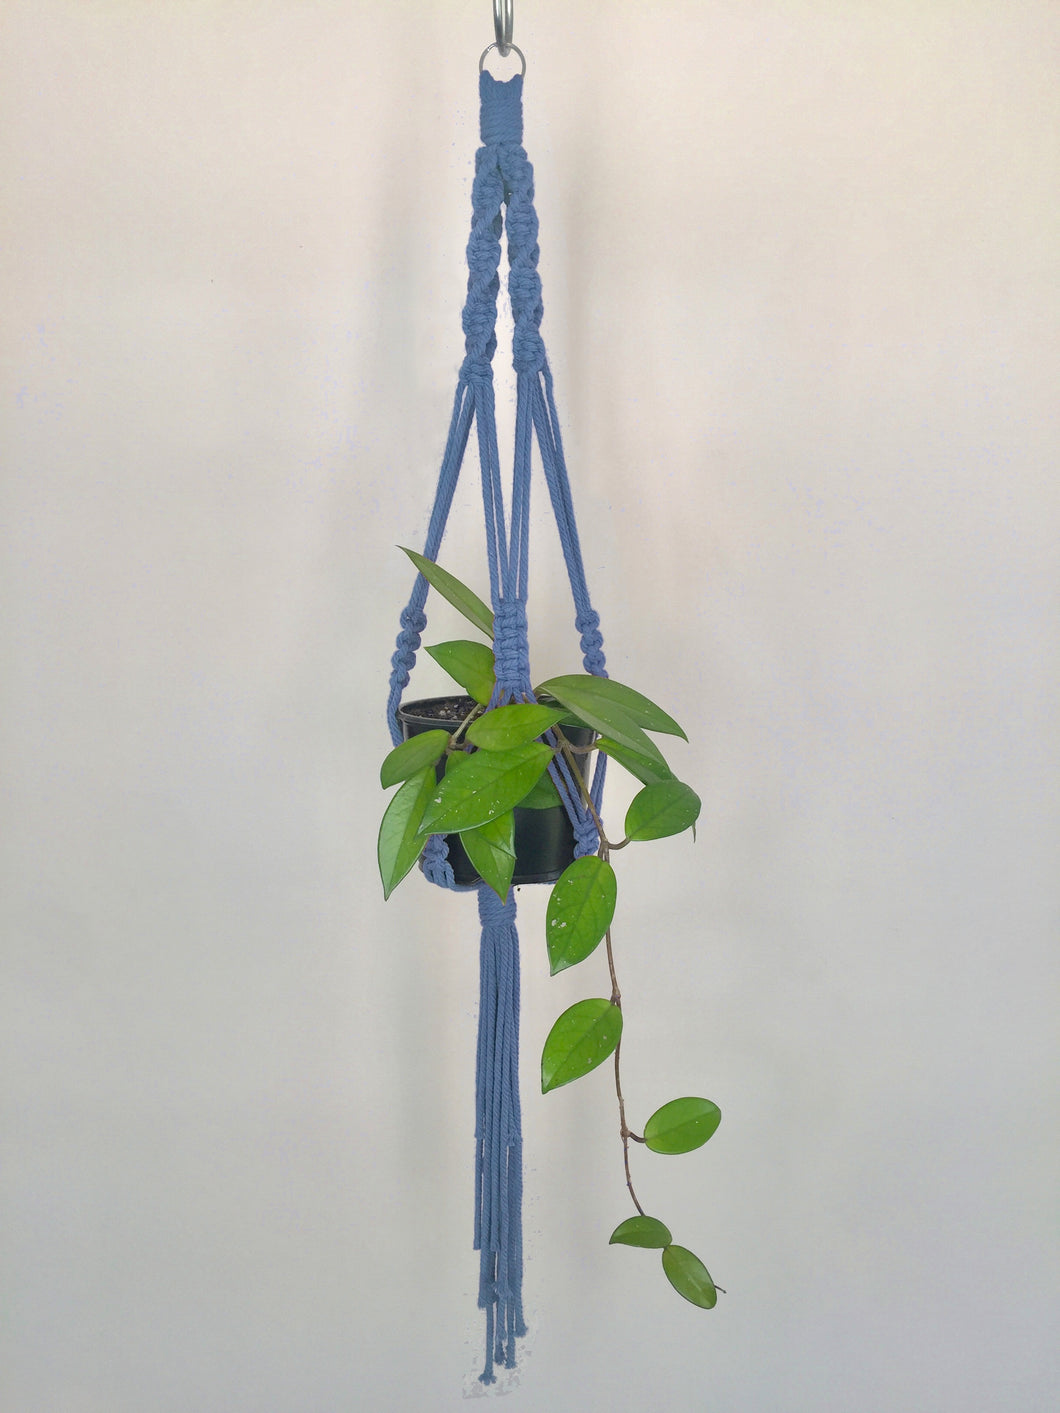 'Fully Twisted' Macrame Plant Hanger